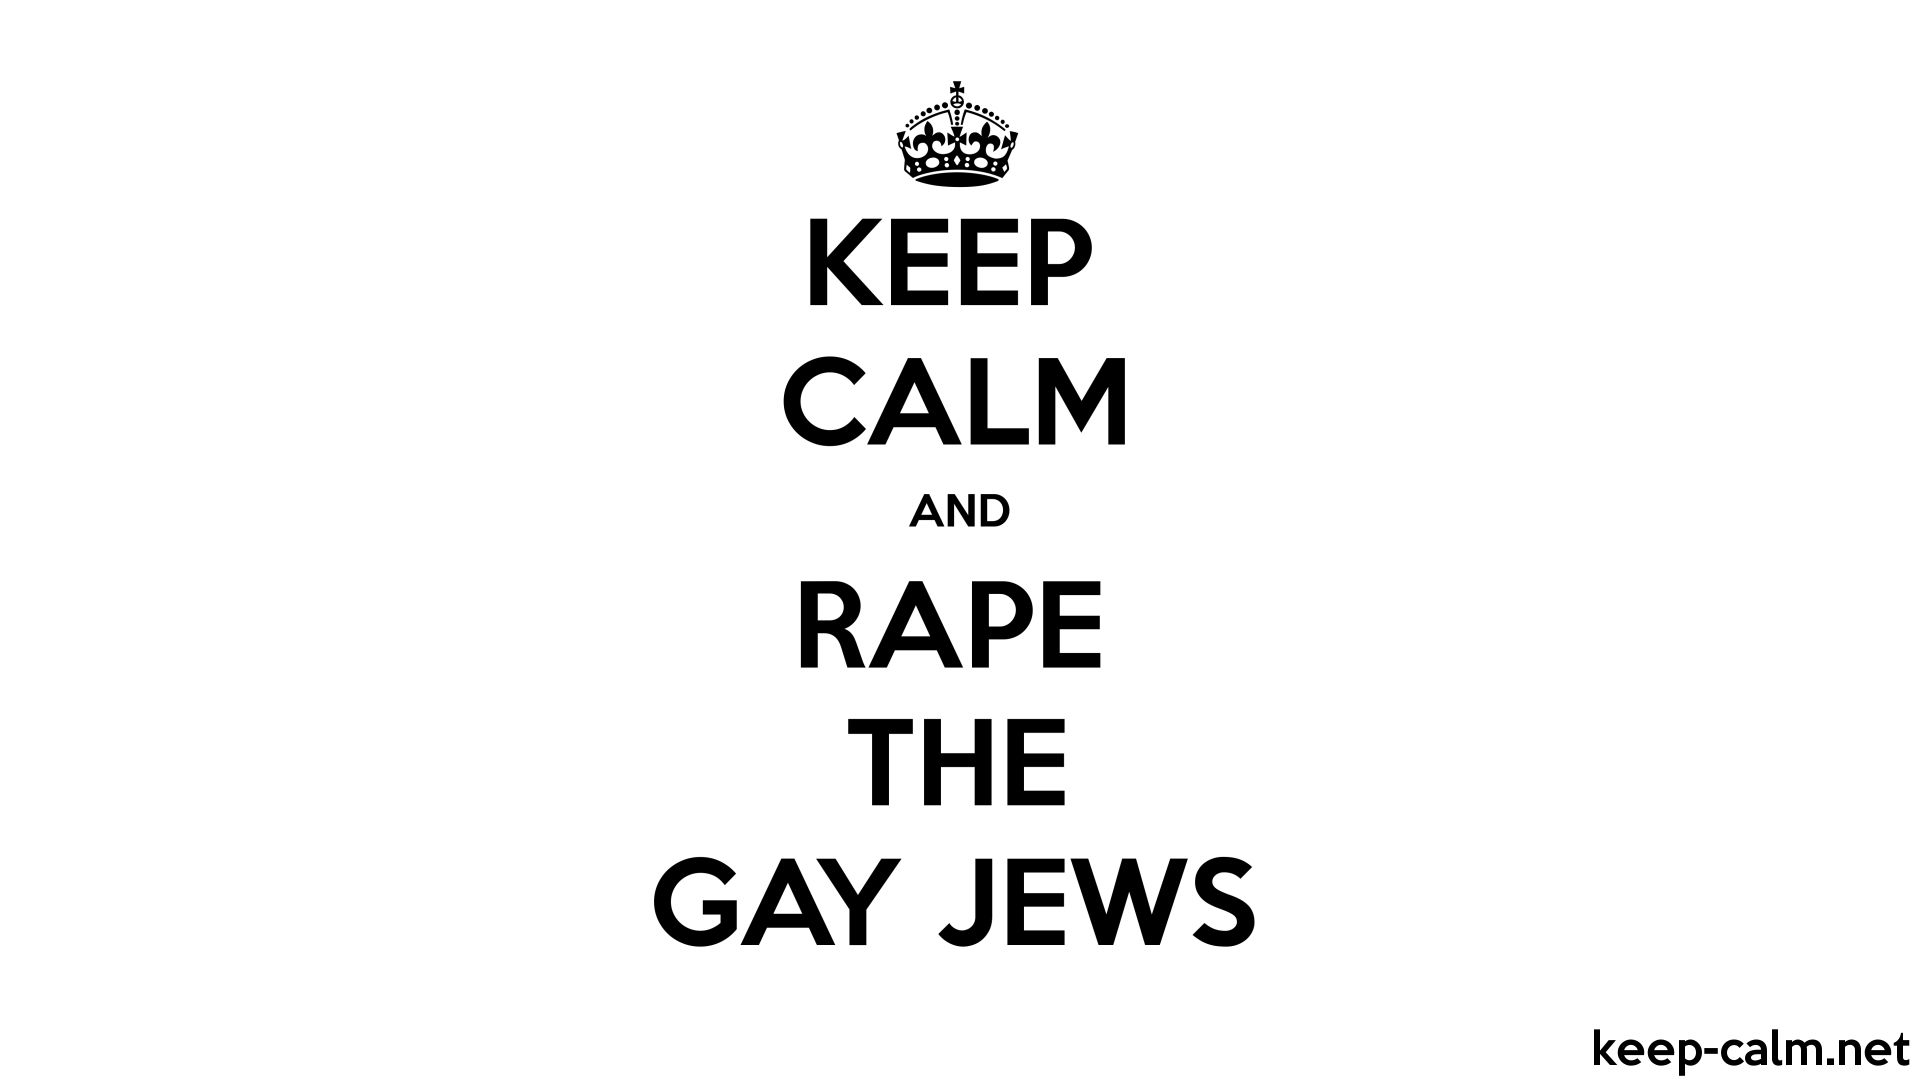 KEEP CALM AND RAPE THE GAY JEWS